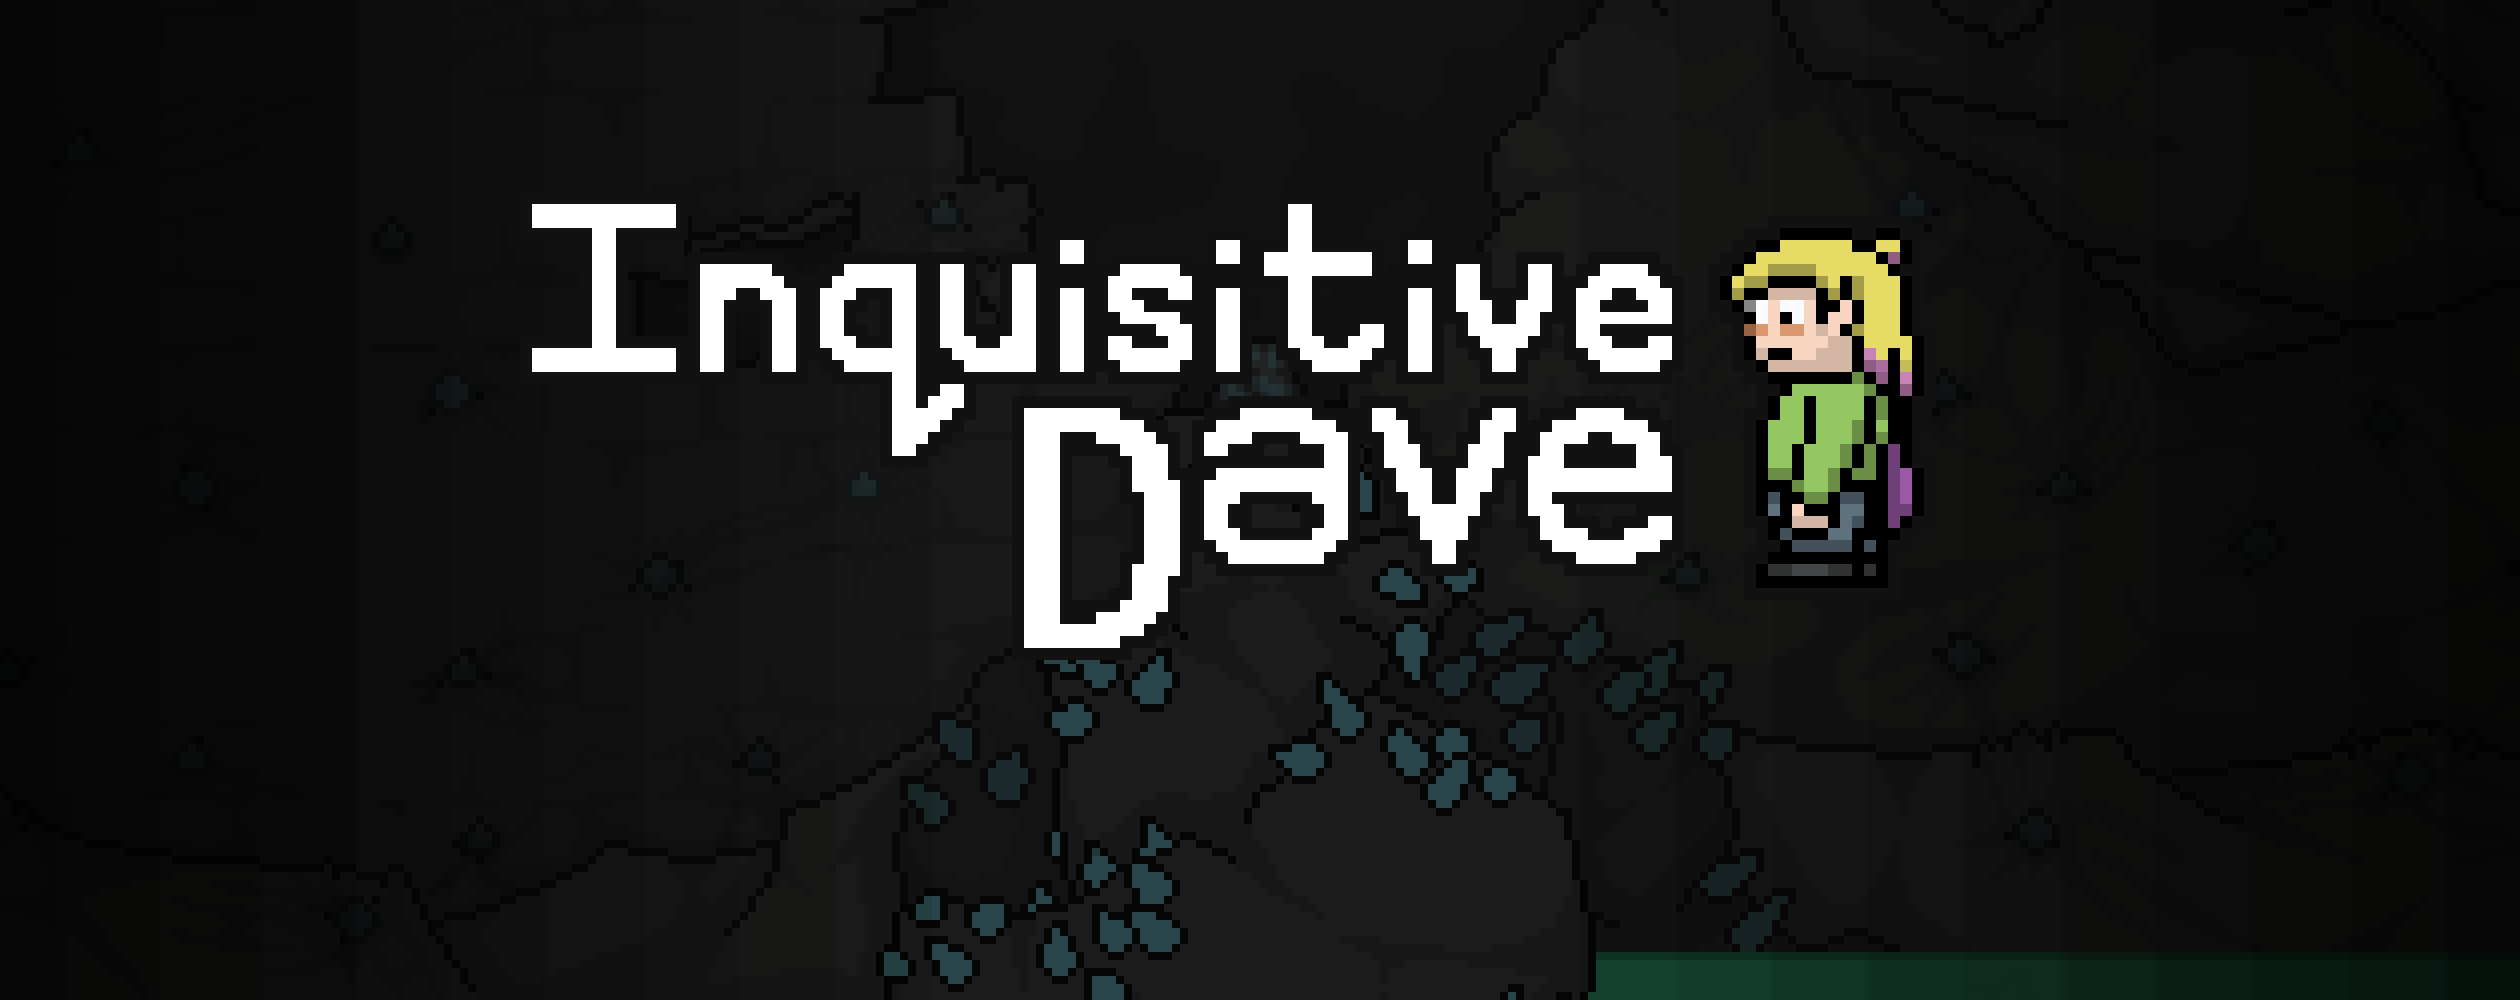 Inquisitive Dave